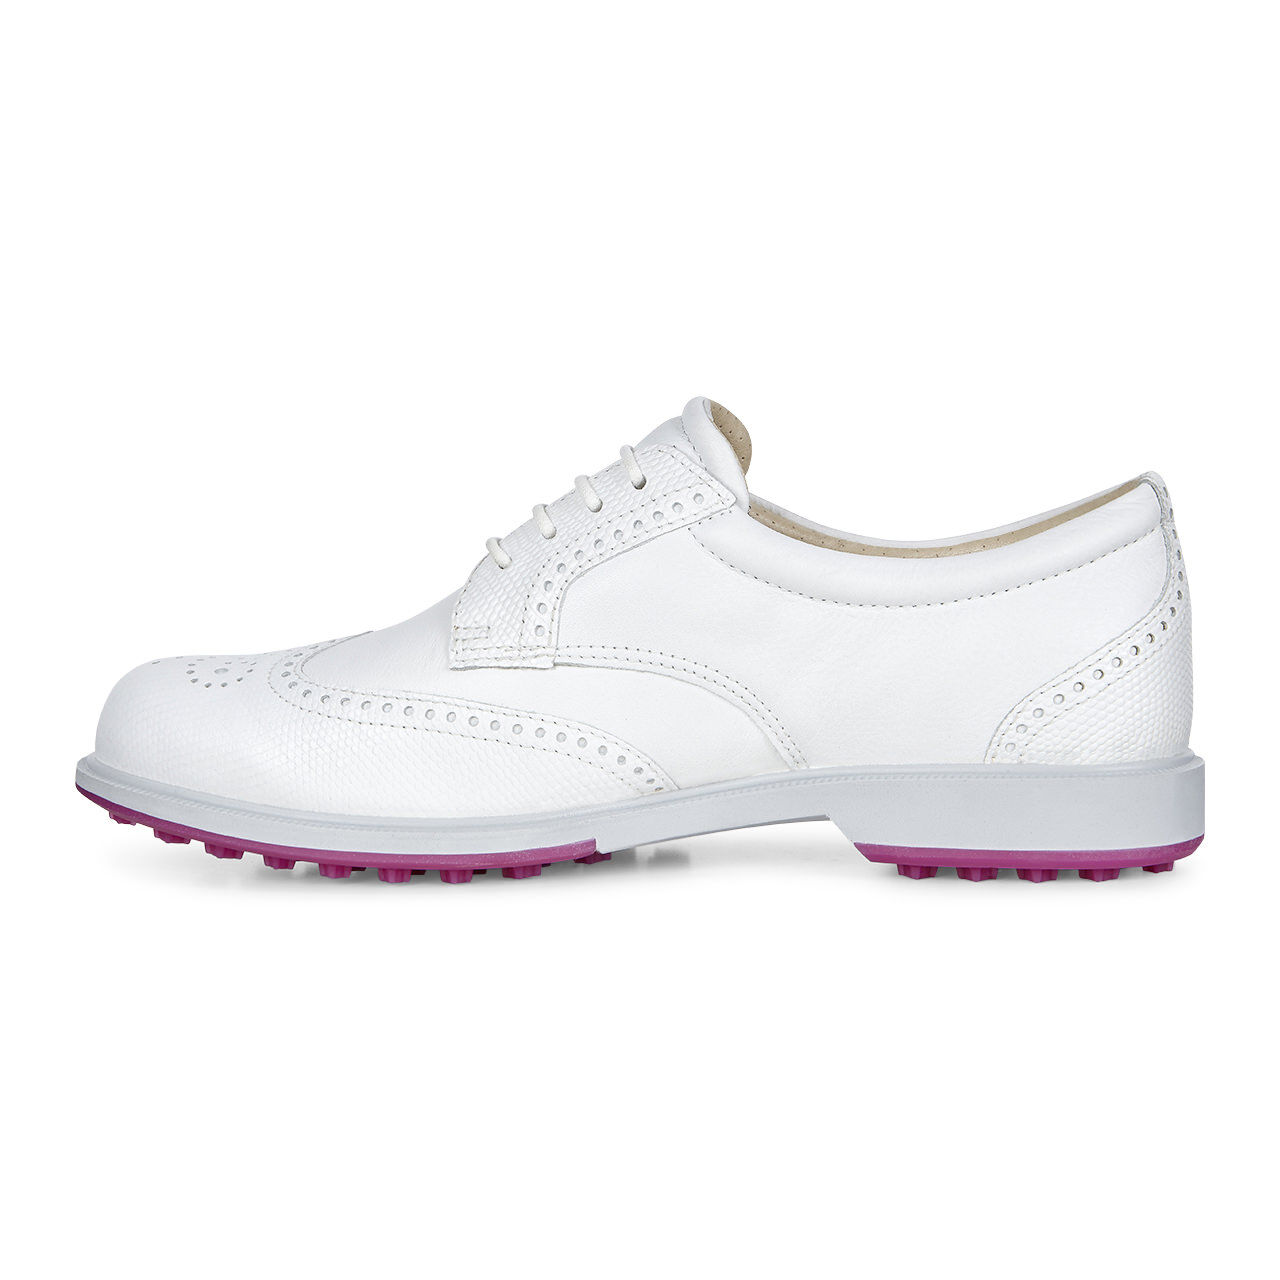 ecco womens classic hybrid golf shoes